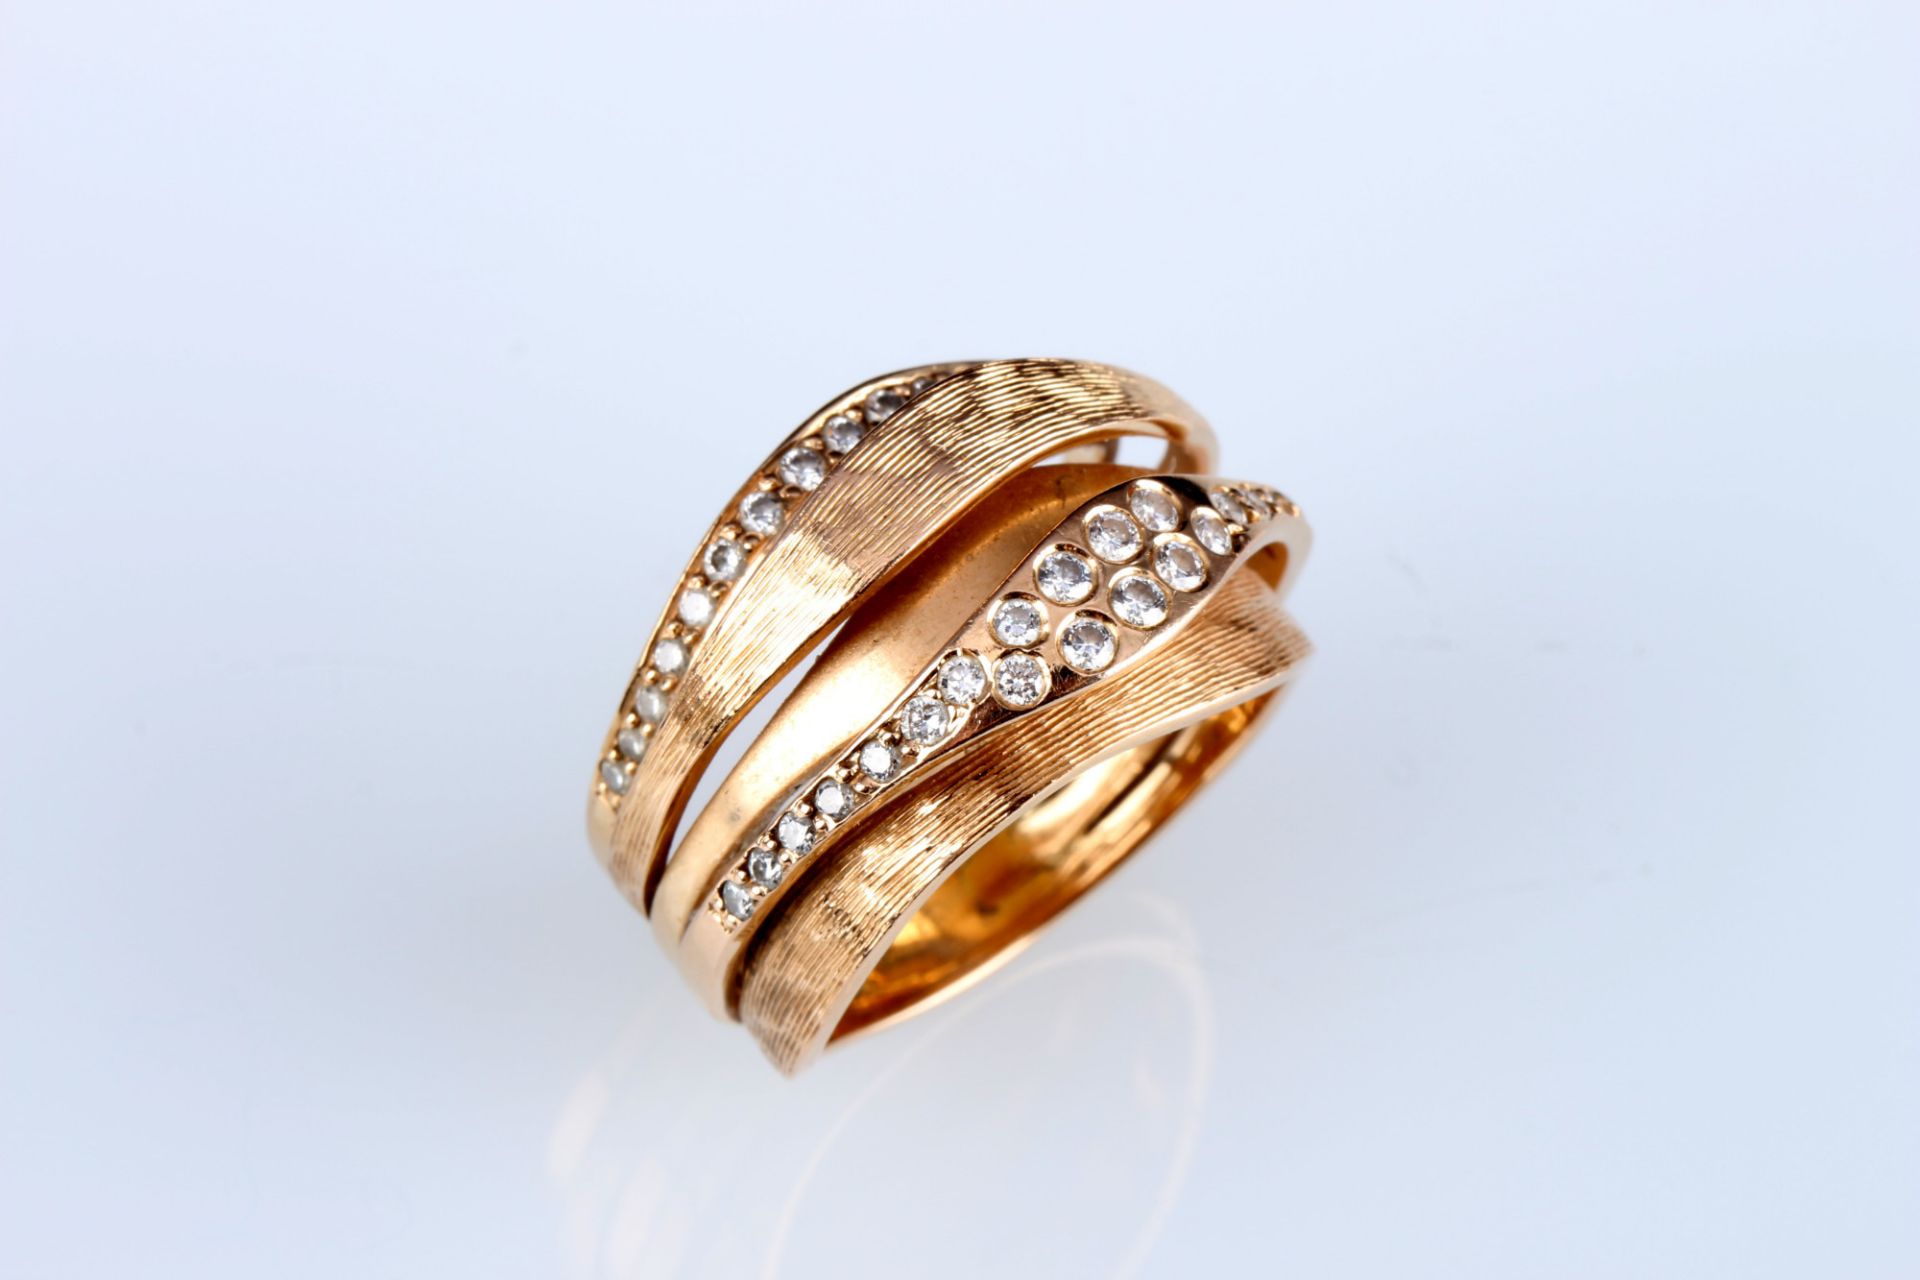 750 Gold Croisé Ring with Brilliant-Cut Diamonds, - Image 2 of 6